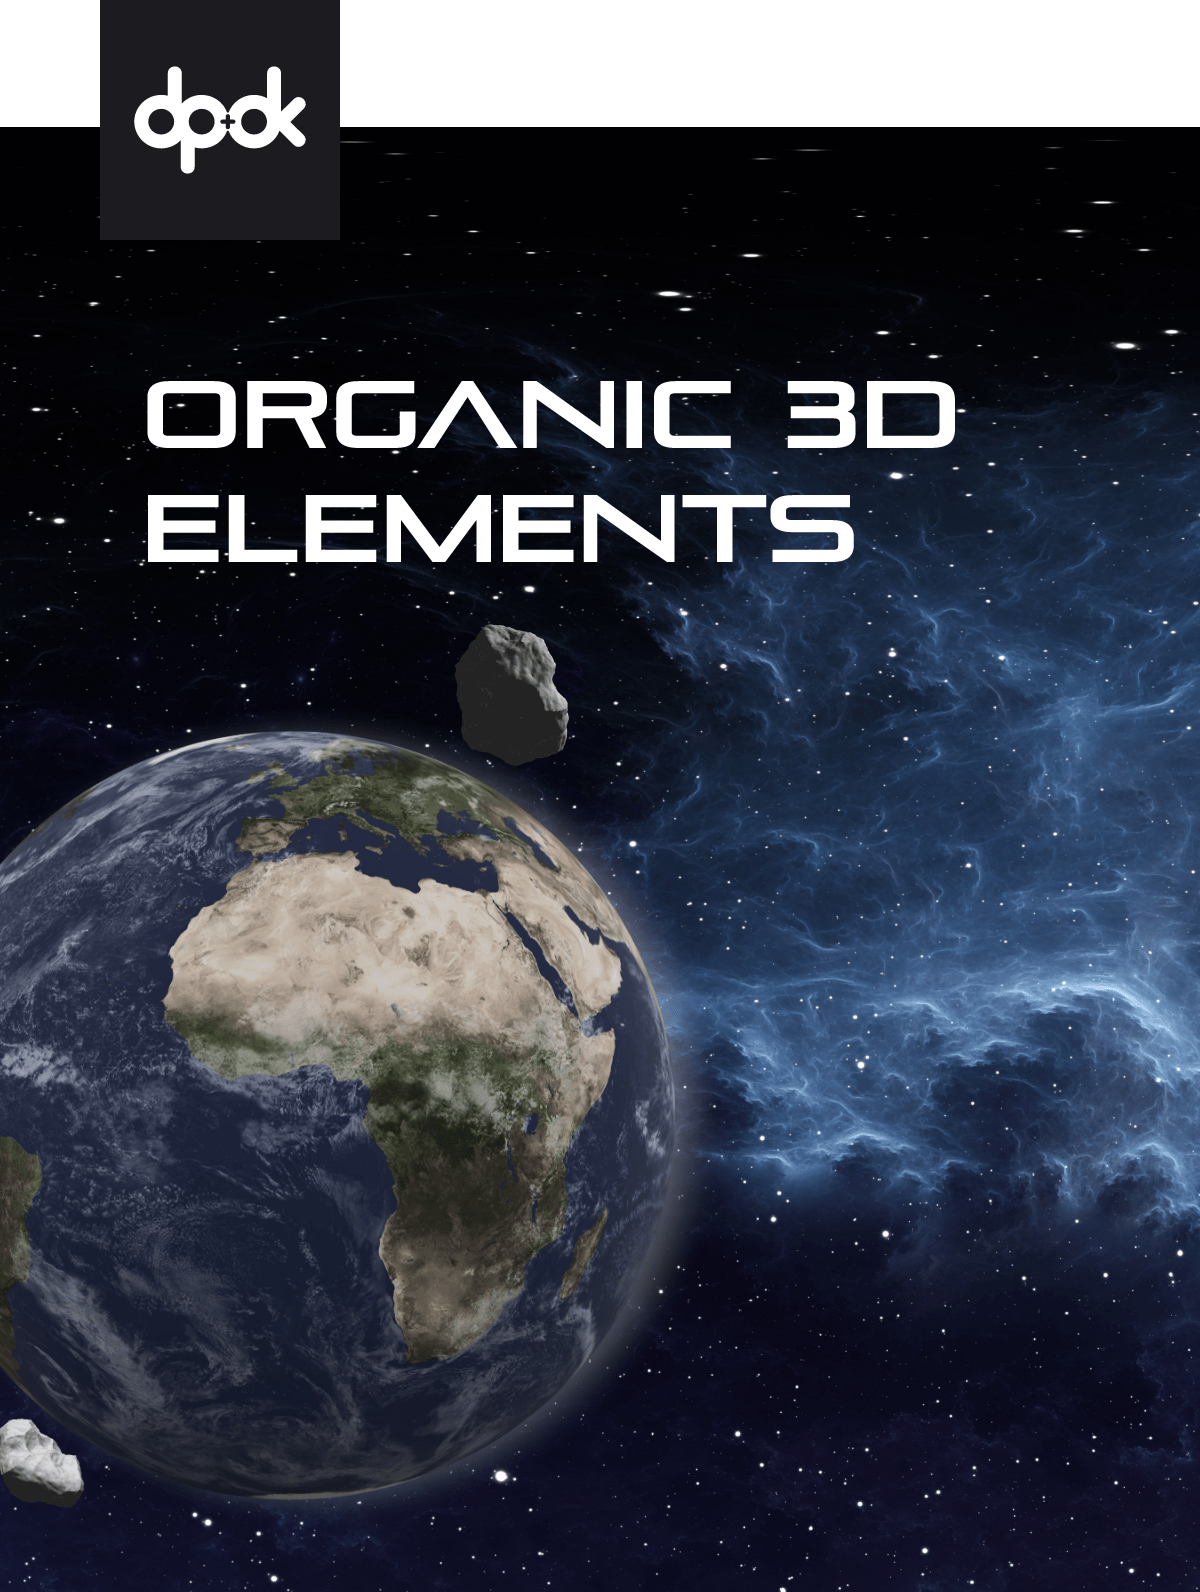 Organic 3D elements